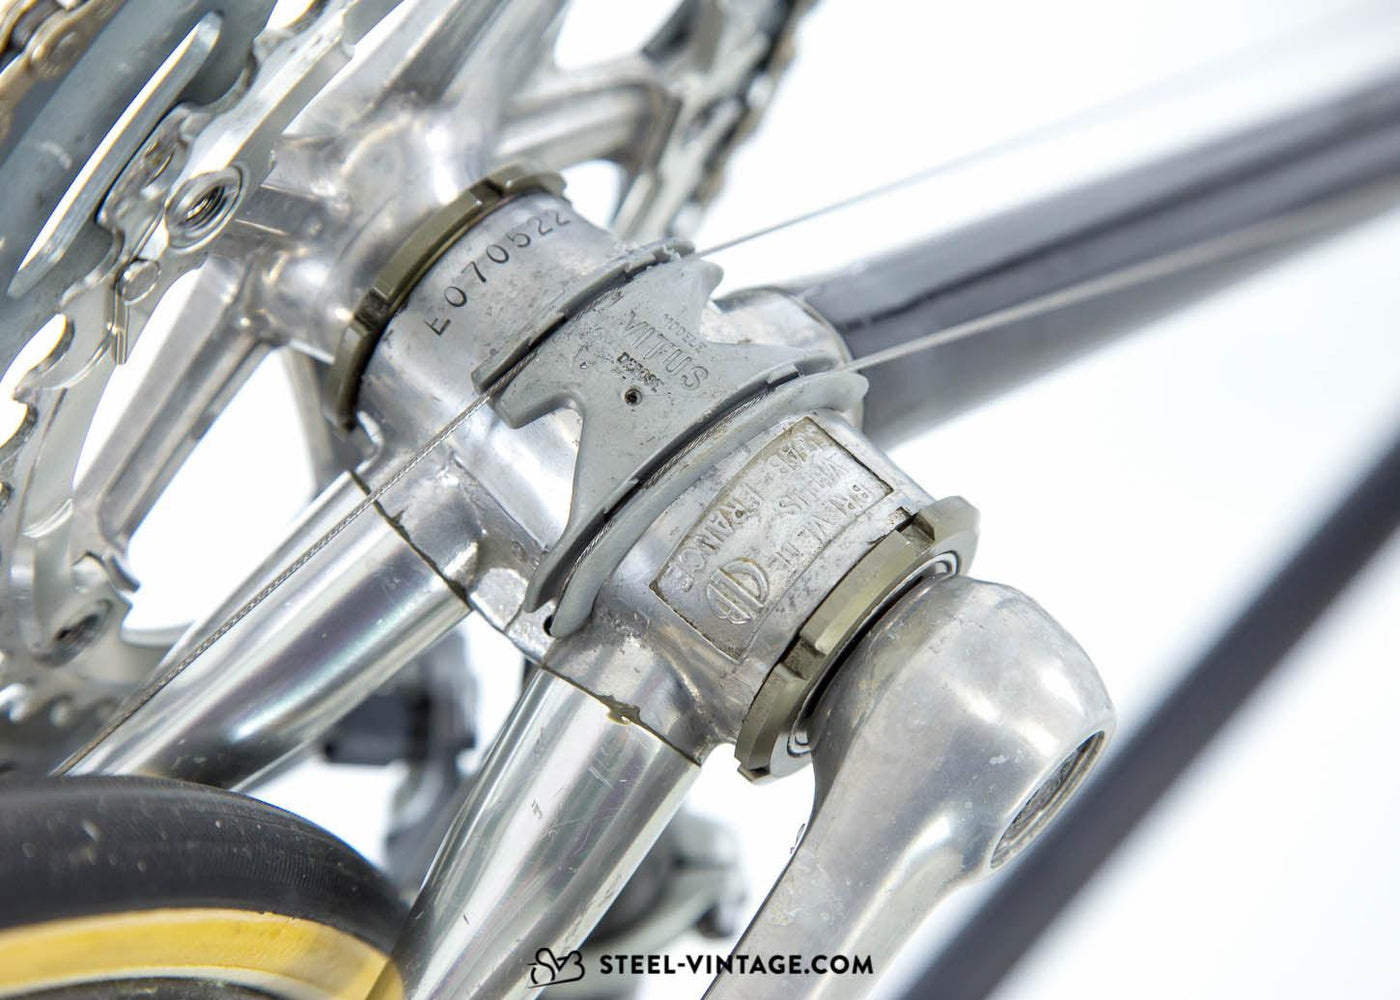 Vitus 979 Aluminium Road Bicycle 1980s - Steel Vintage Bikes